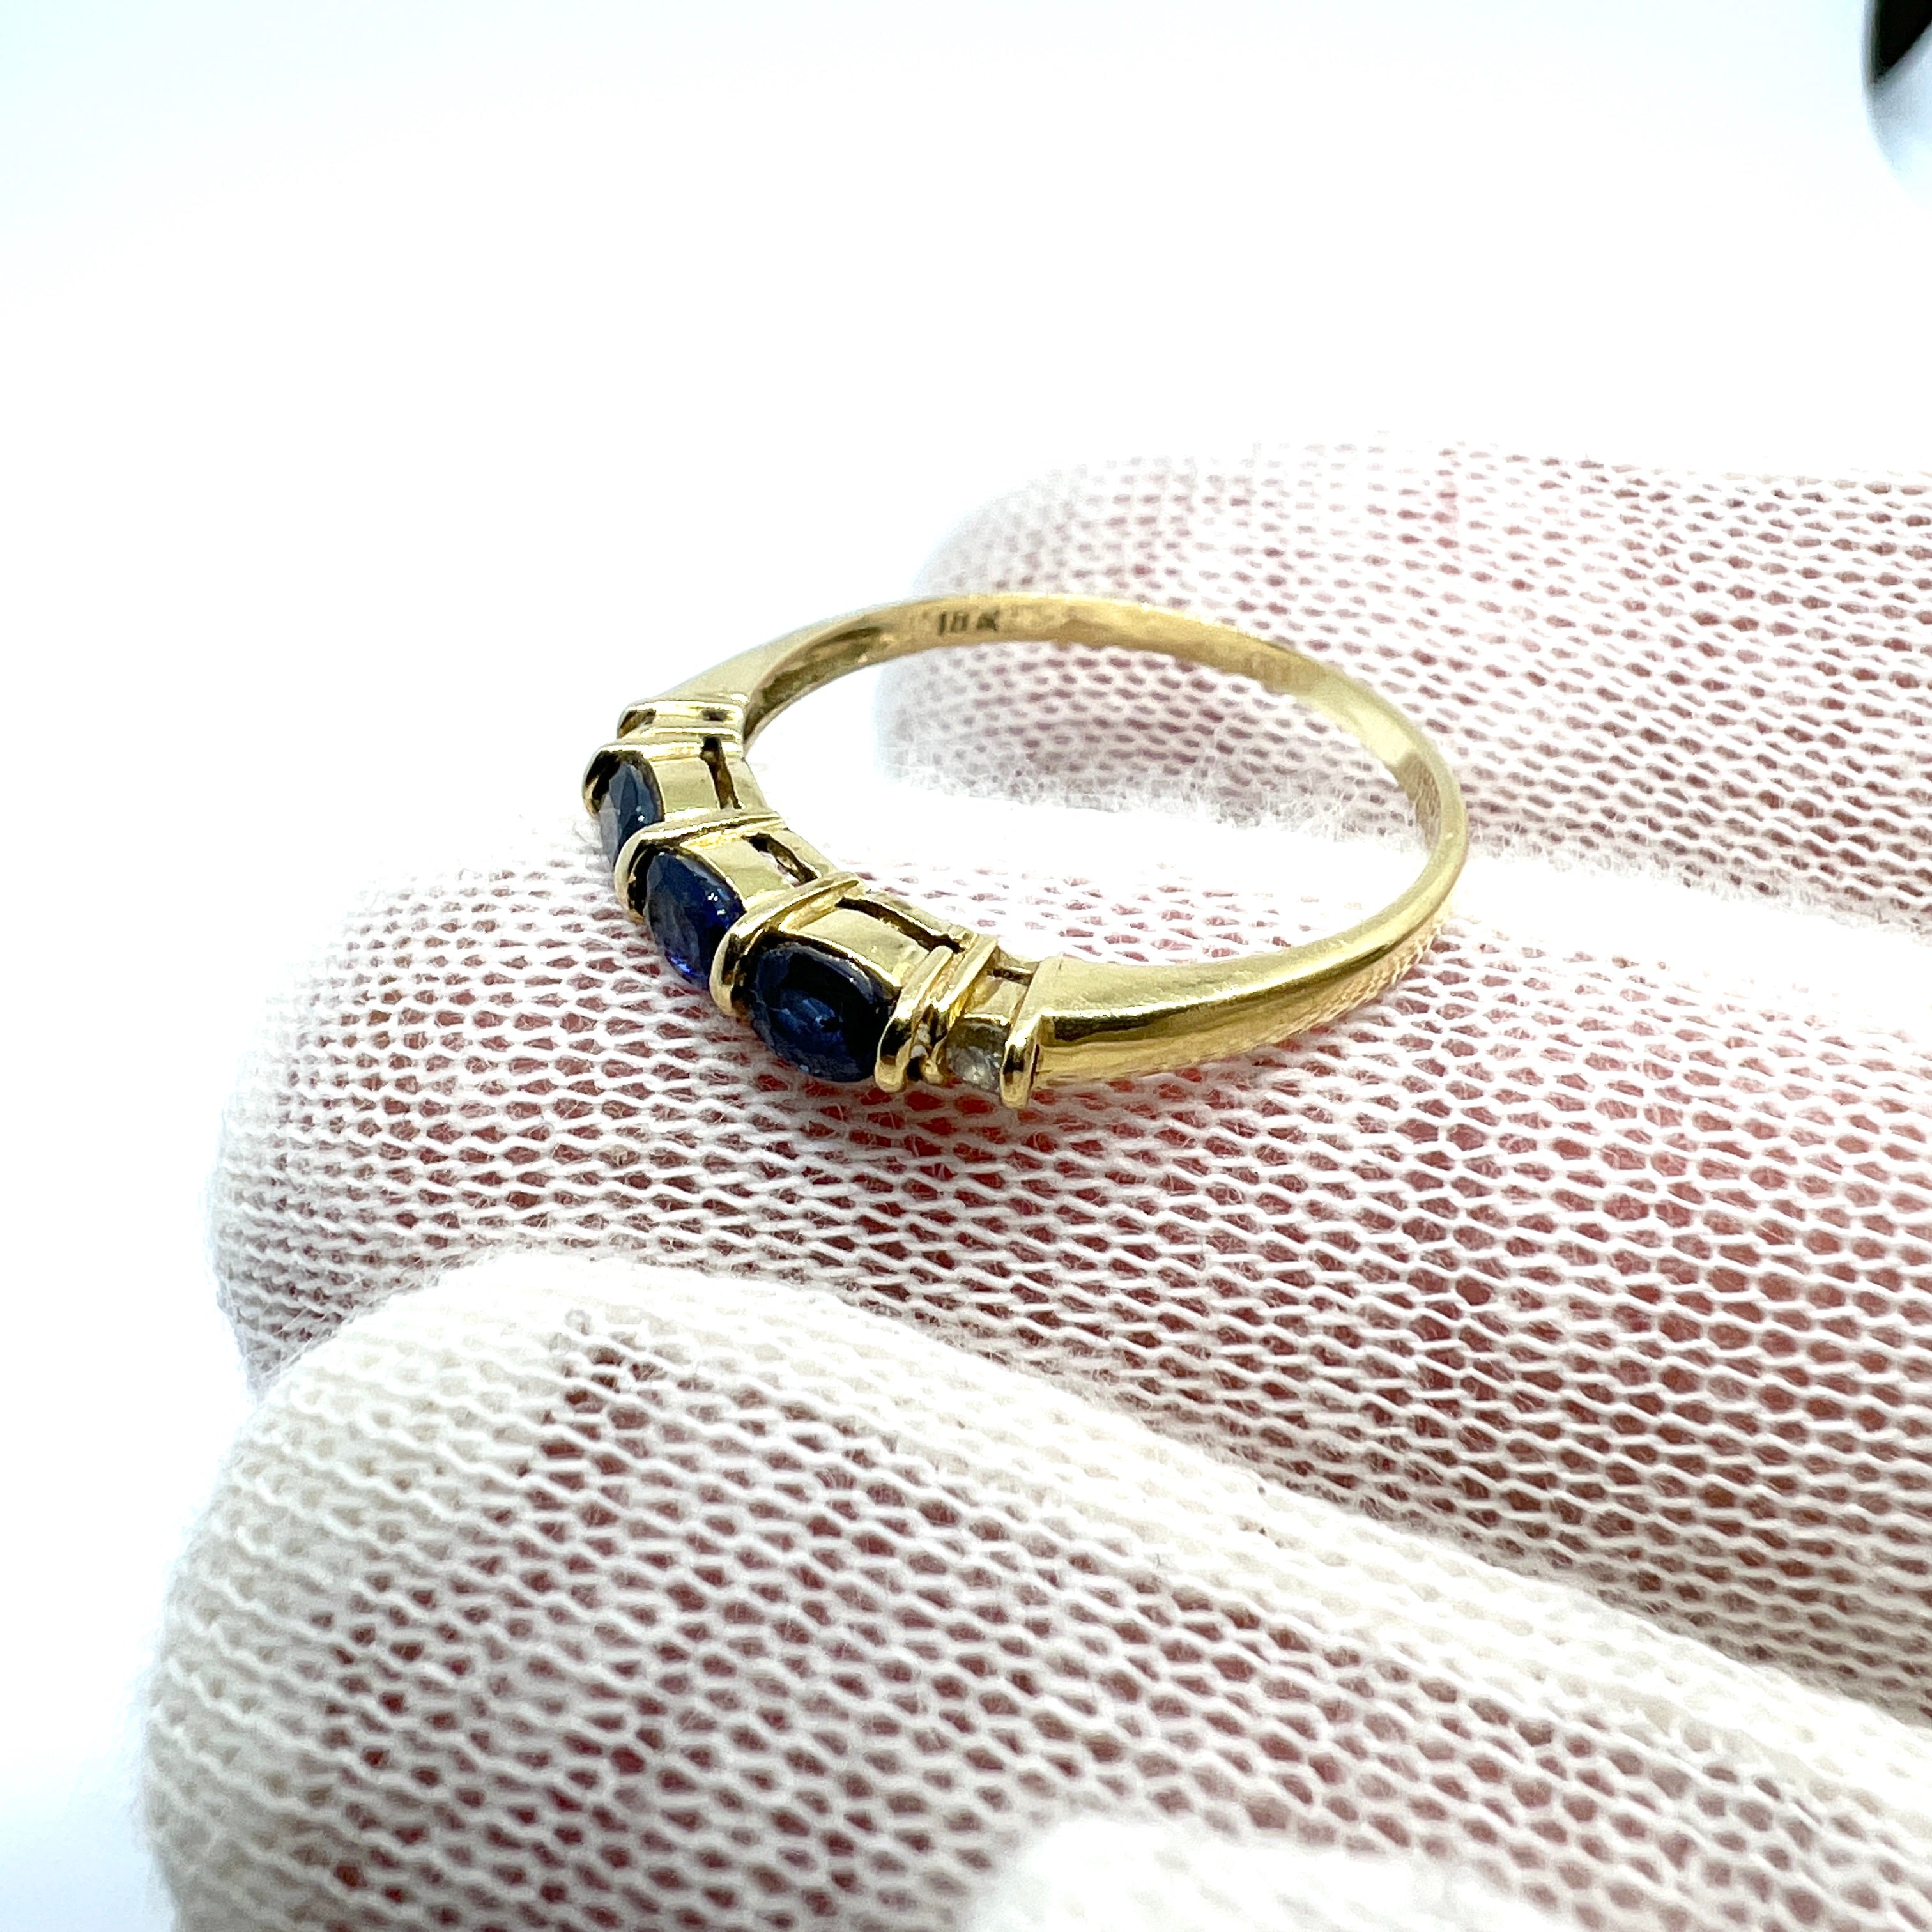 Vintage 18k Gold Diamond Sapphire Ring.